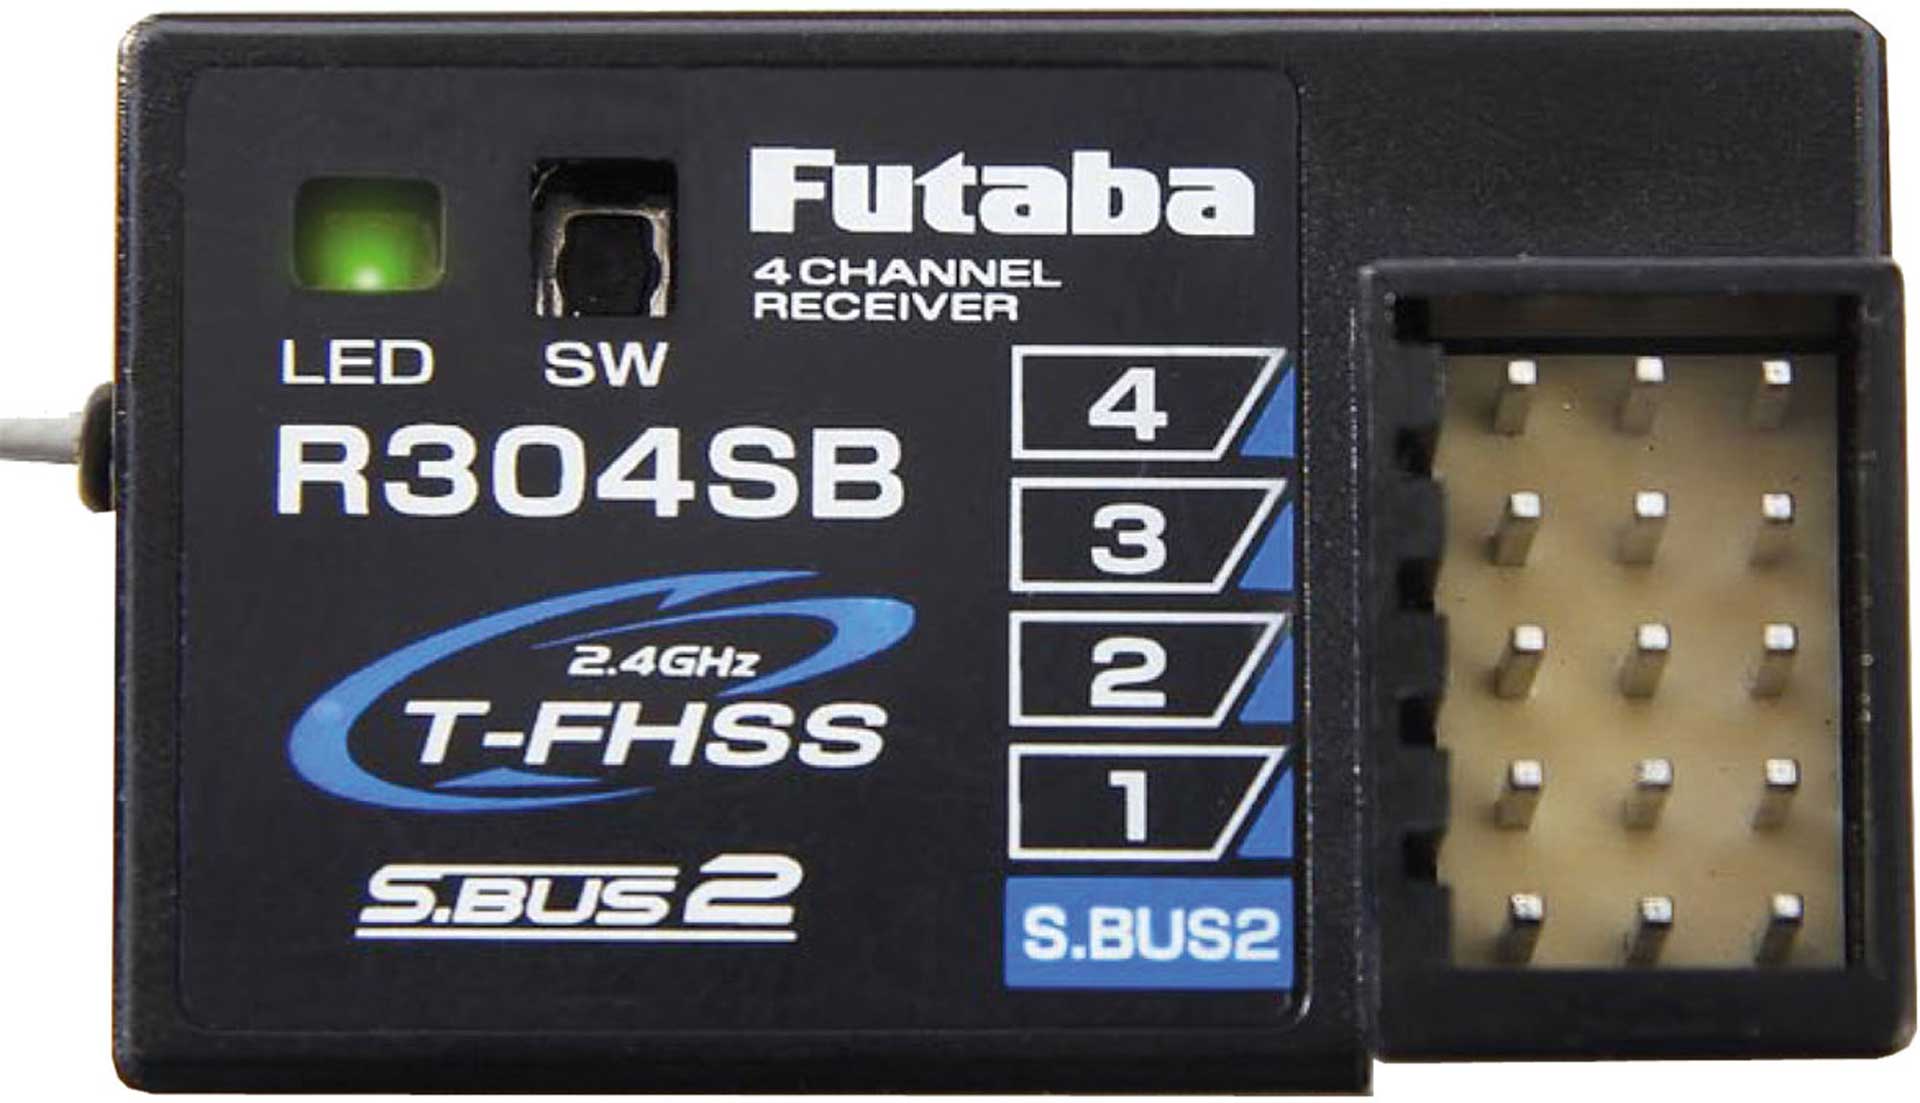 FUTABA R 304SB 2.4GHZ T-FHSS 4K RECEIVER WITH TELEMETRY